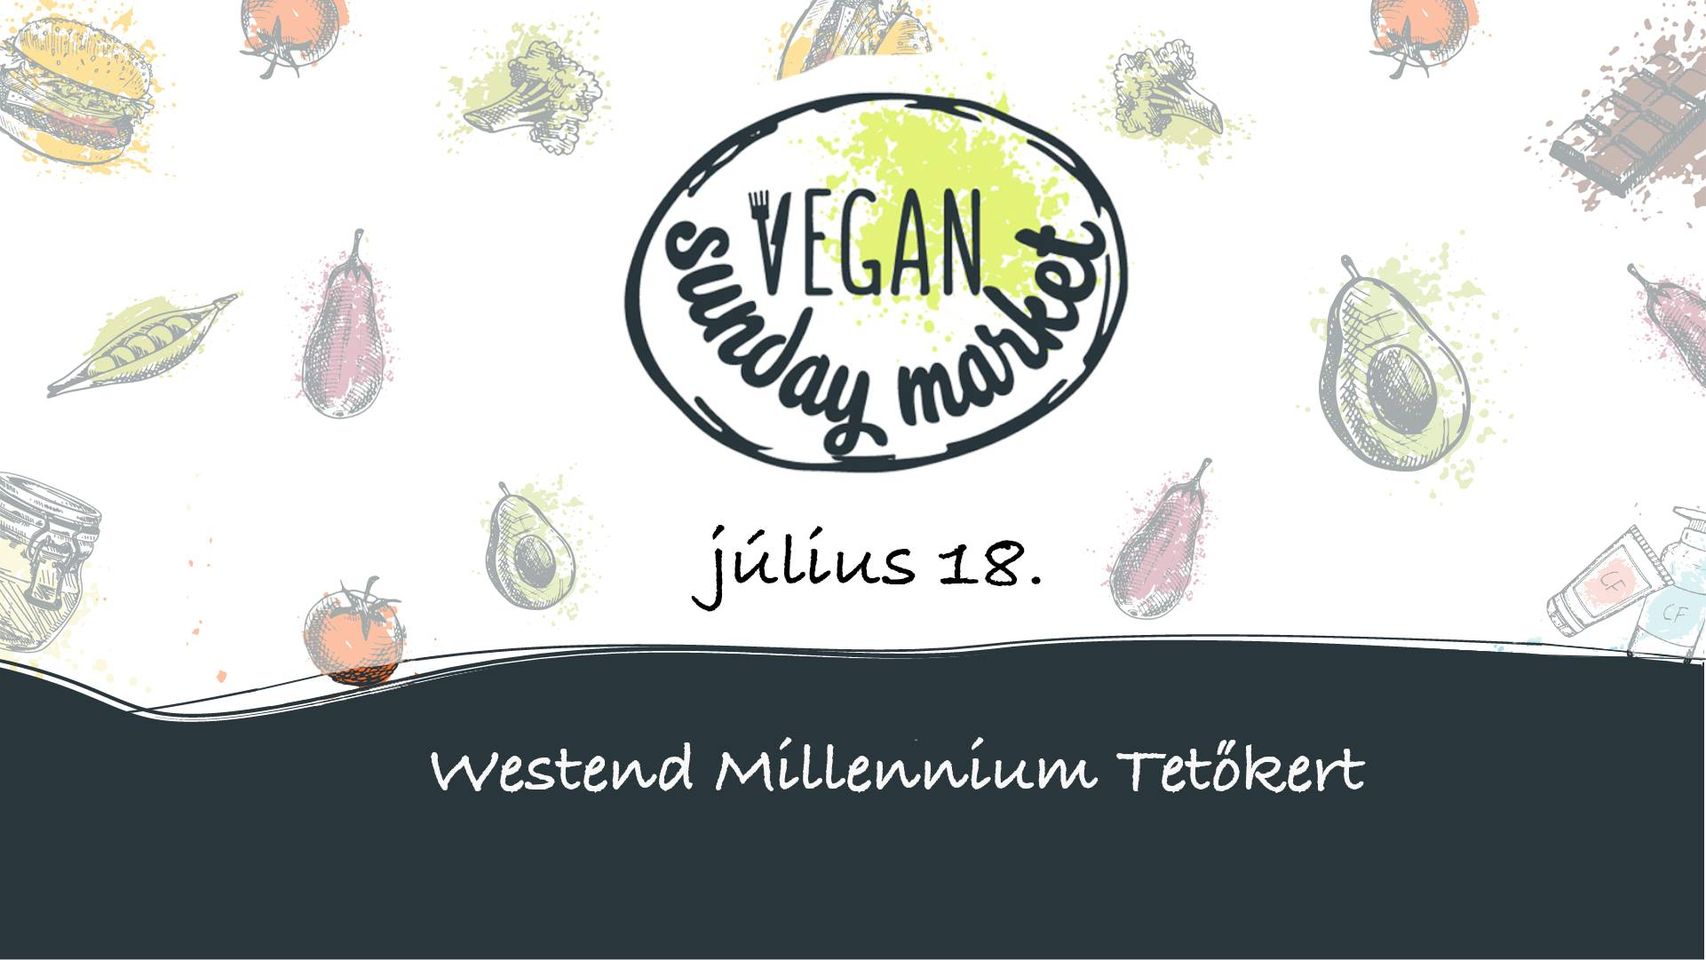 Vegan Weekend Market, Westend Millenium Rooftop, 18 July